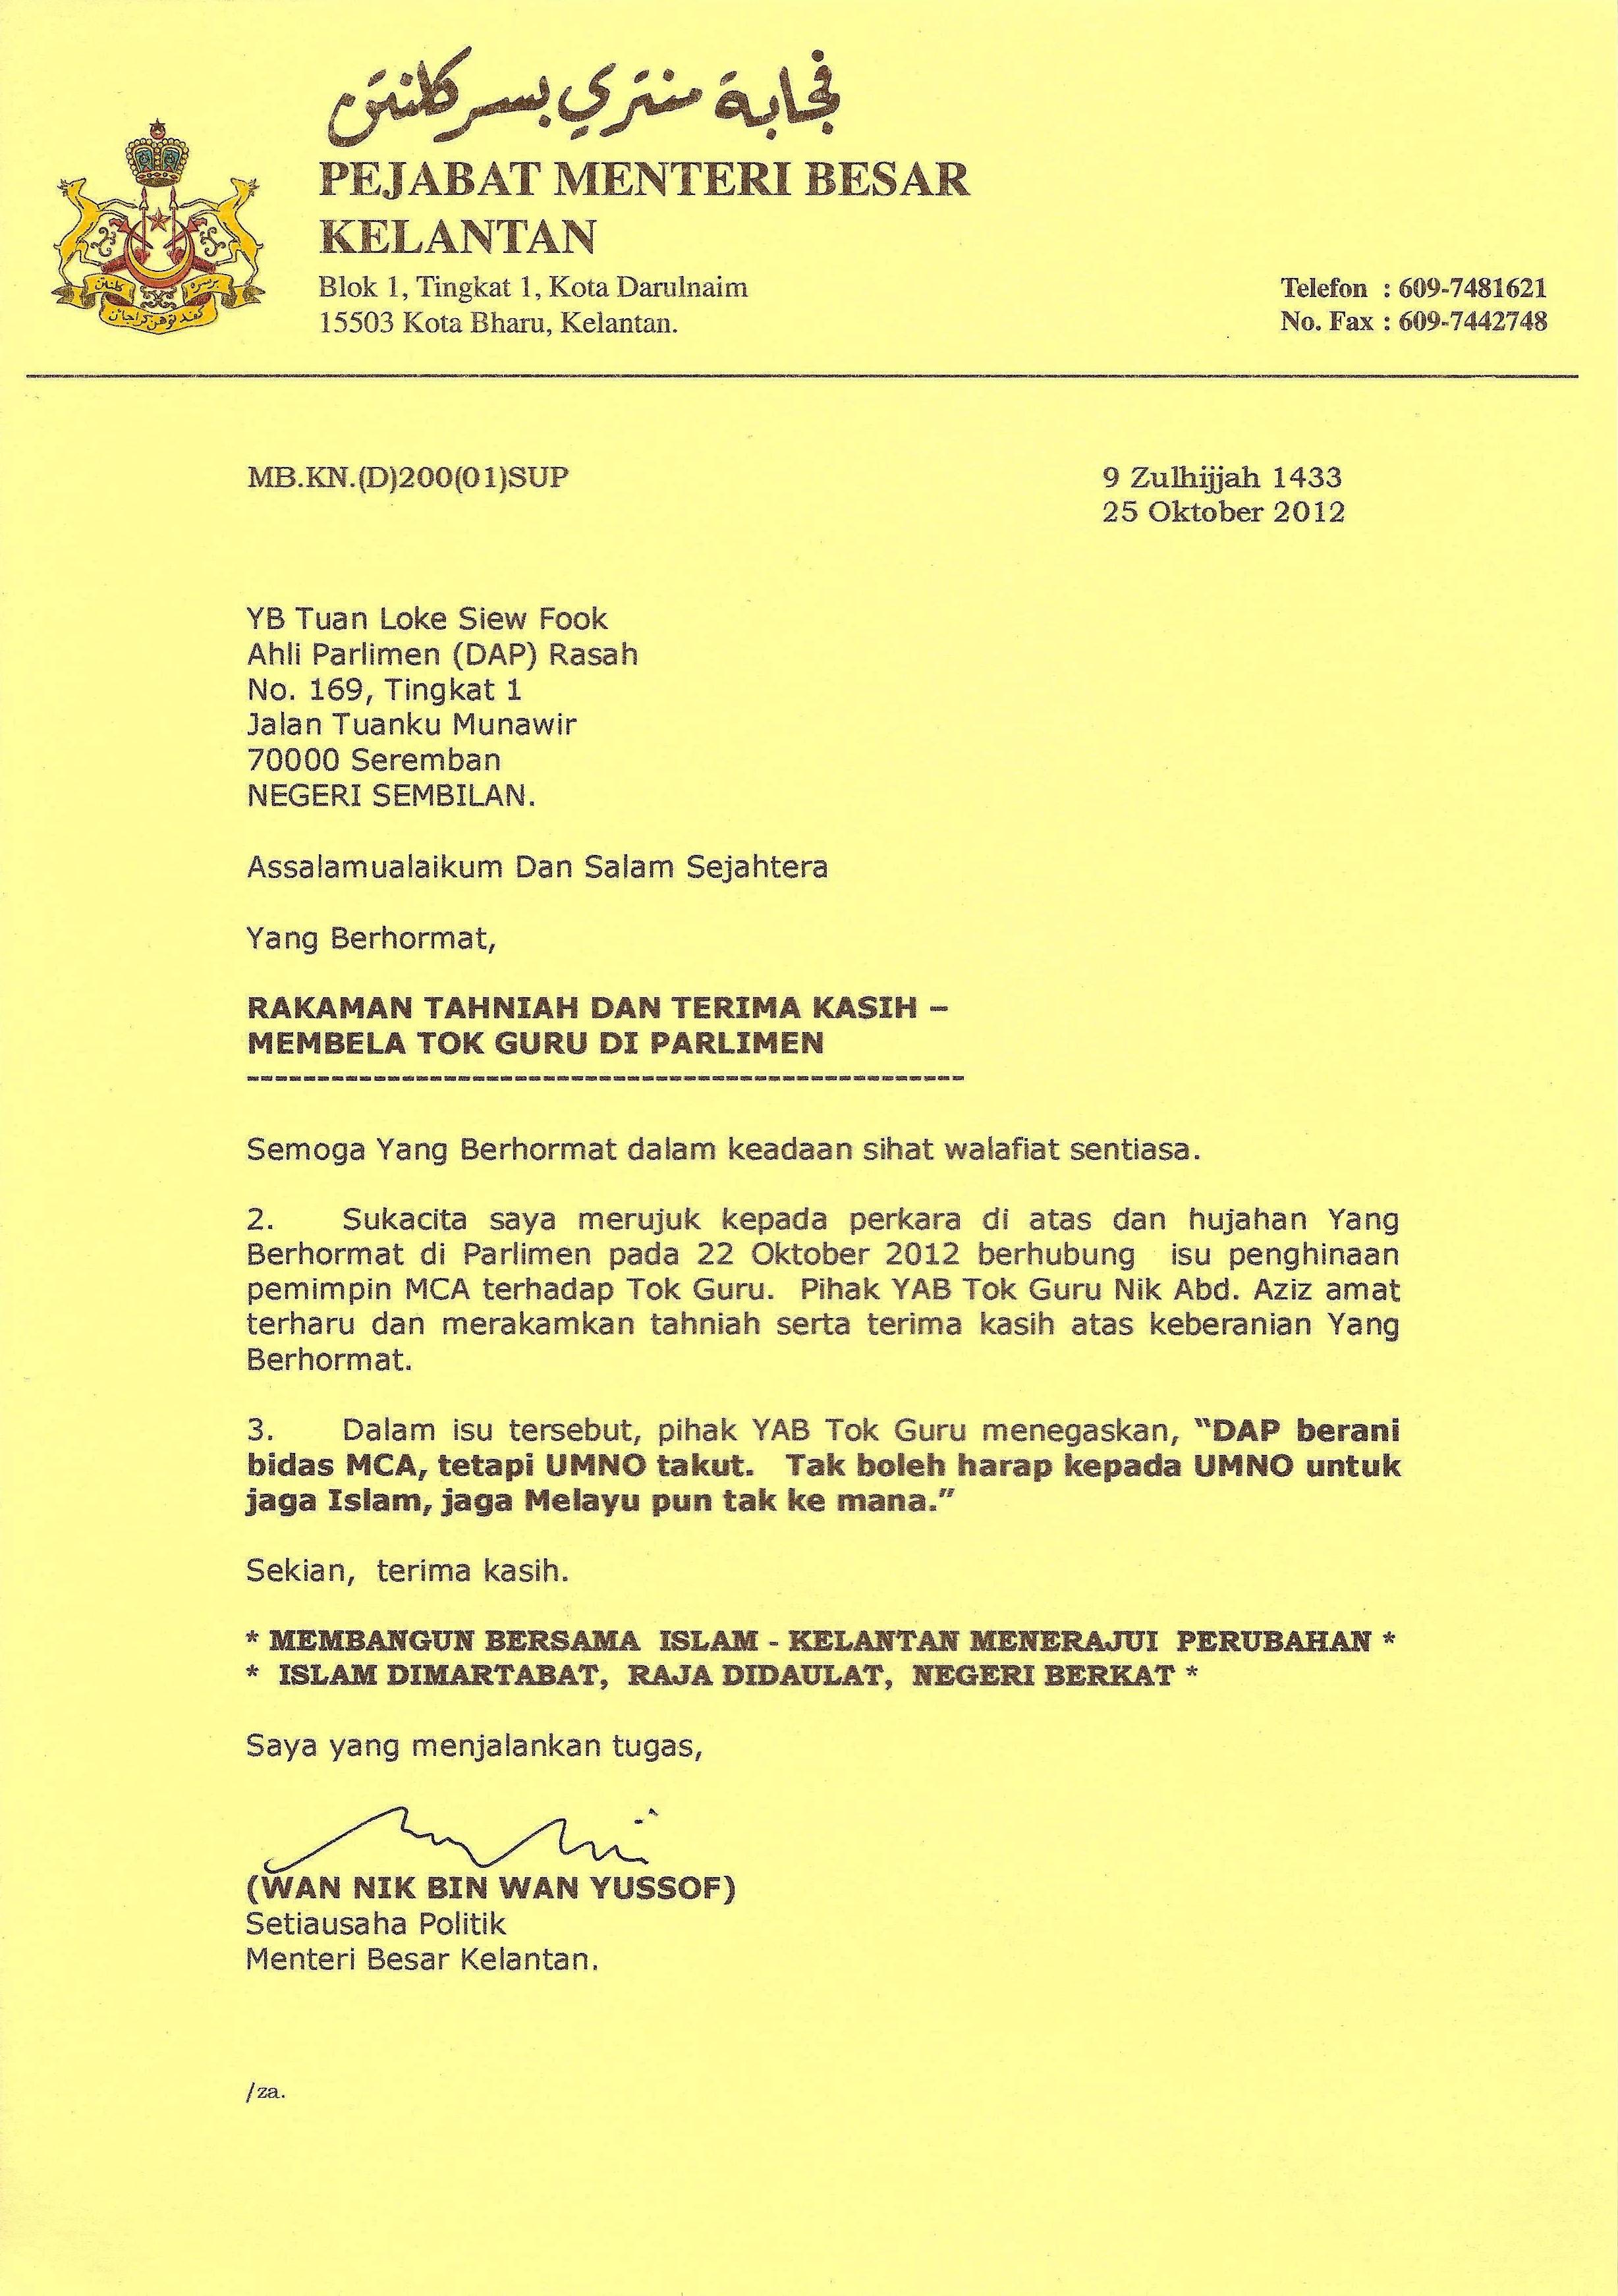 Nik Aziz puji DAP berani bidas MCA.  roketkini.com